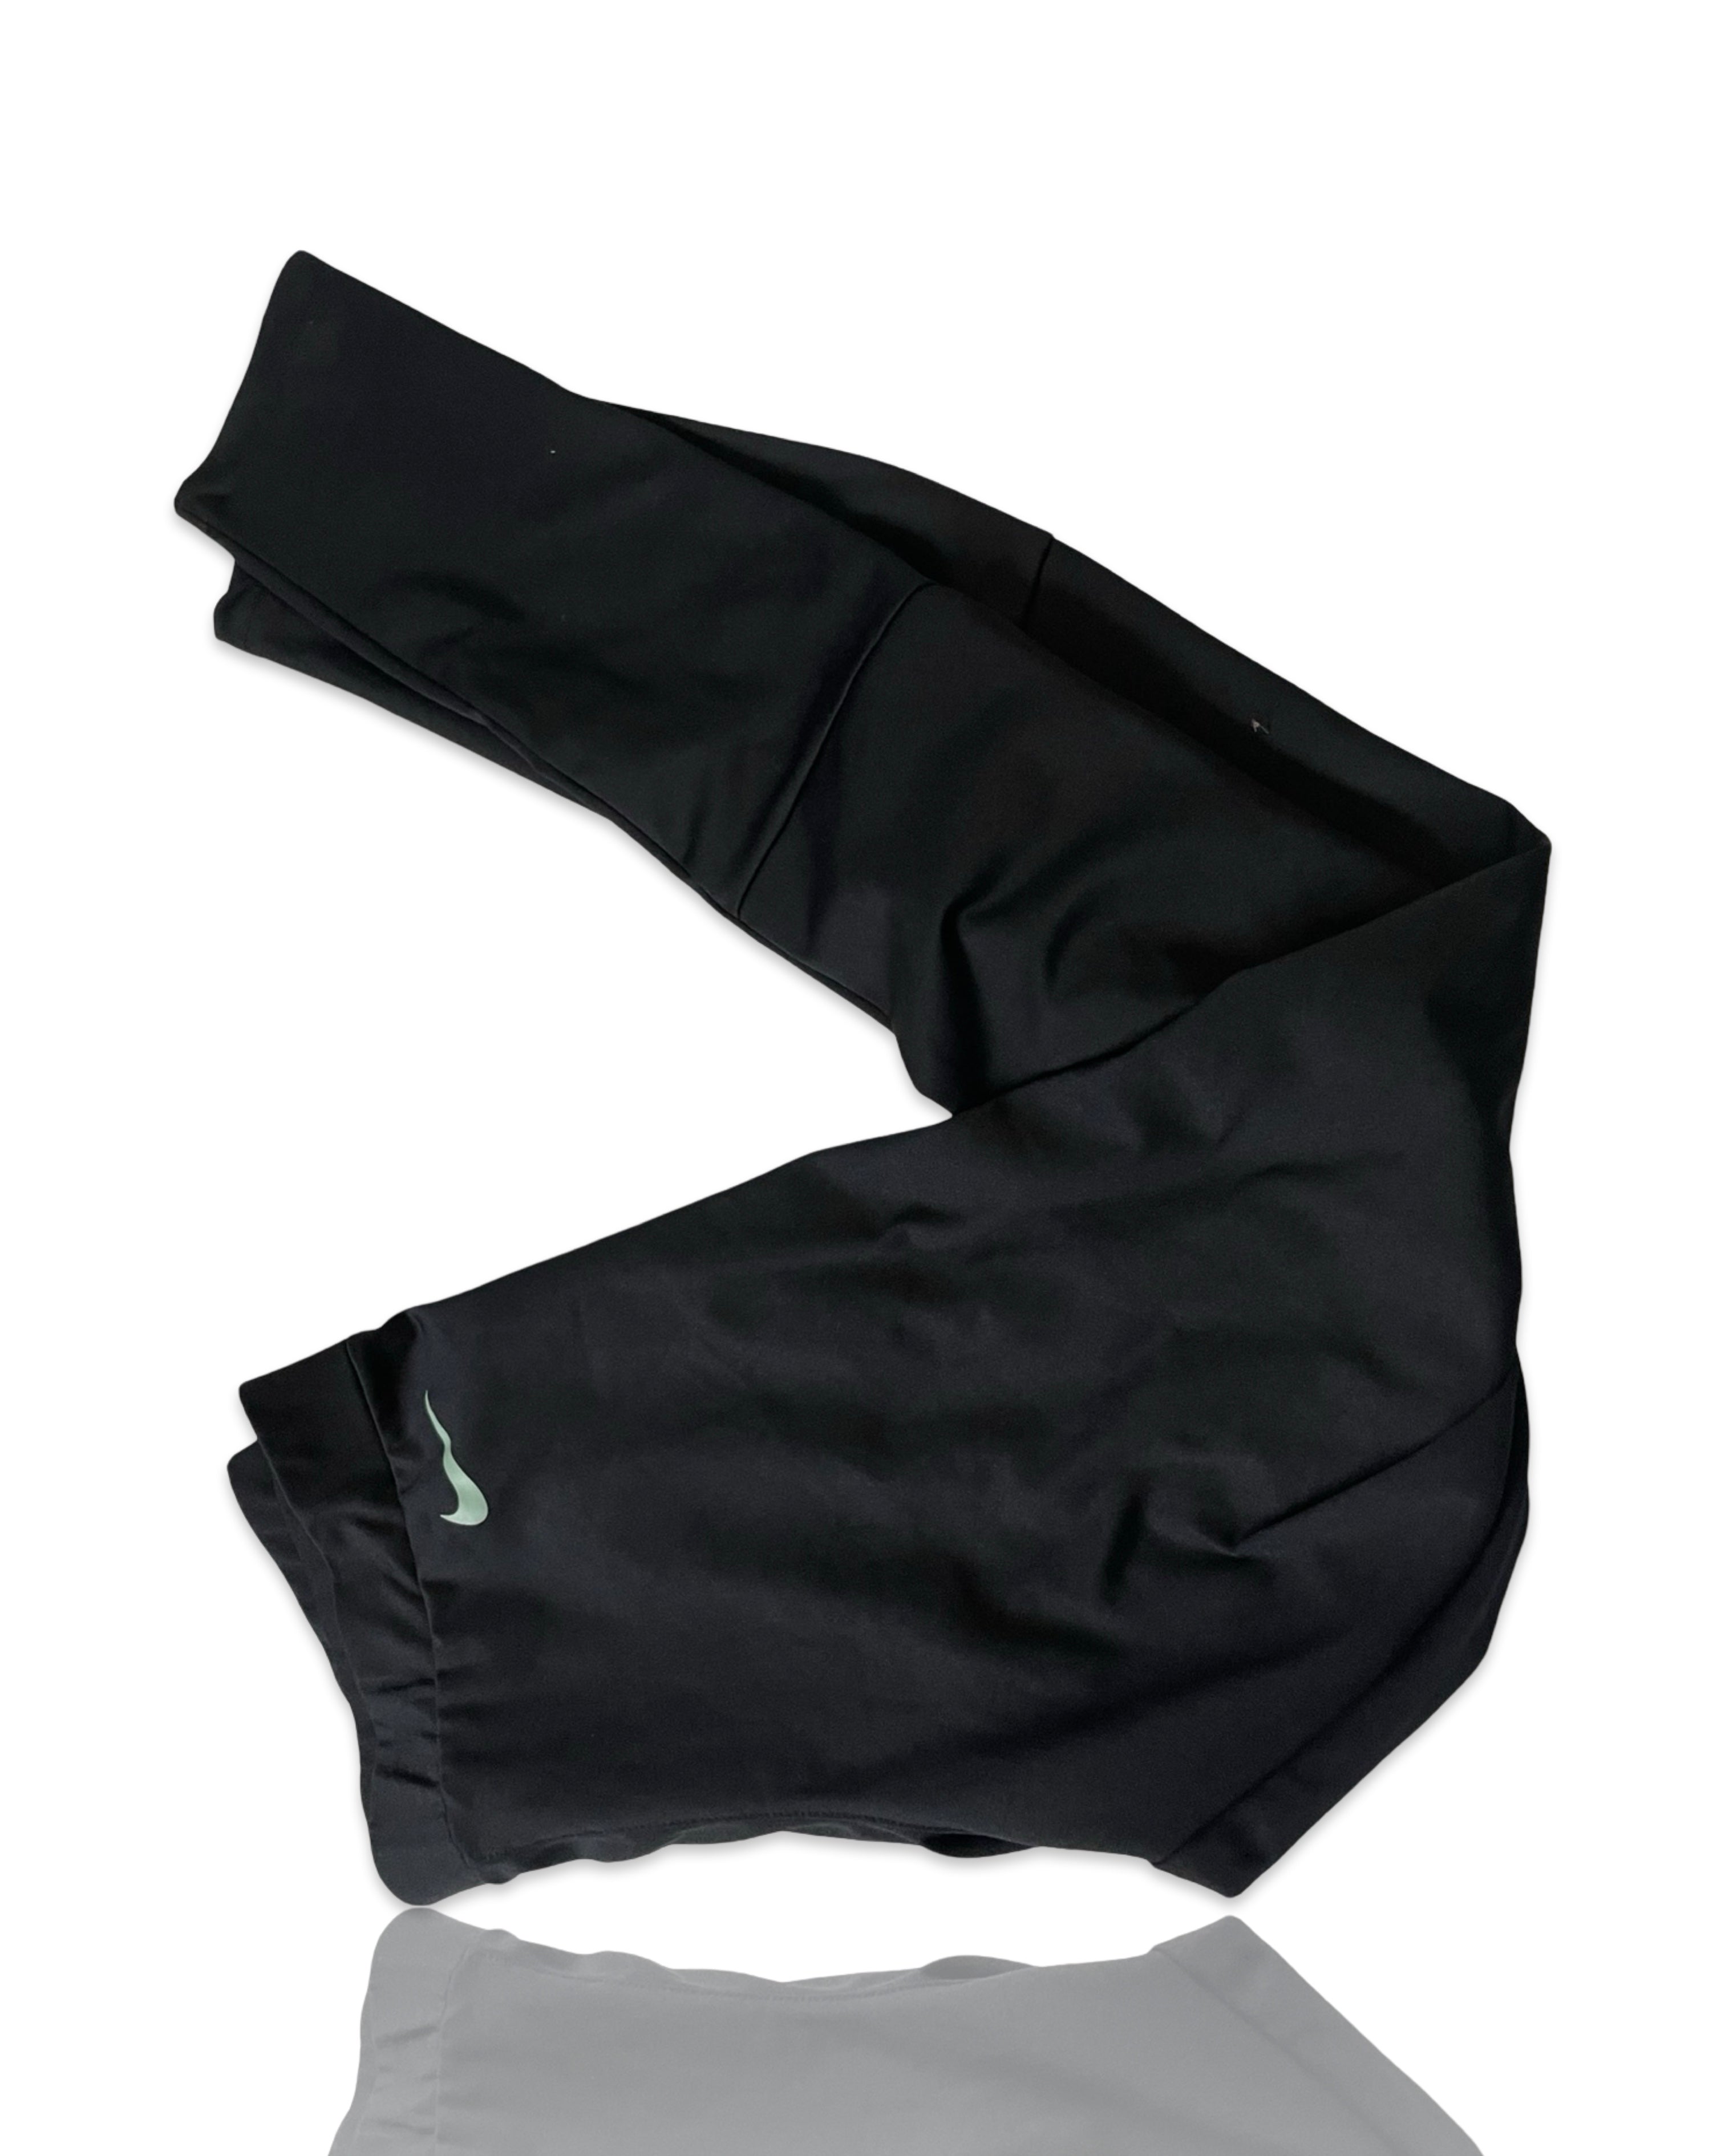 Nike Running Regular Size Women's Leggings in classic black, sized L30 W30! in black  |SKU 4260